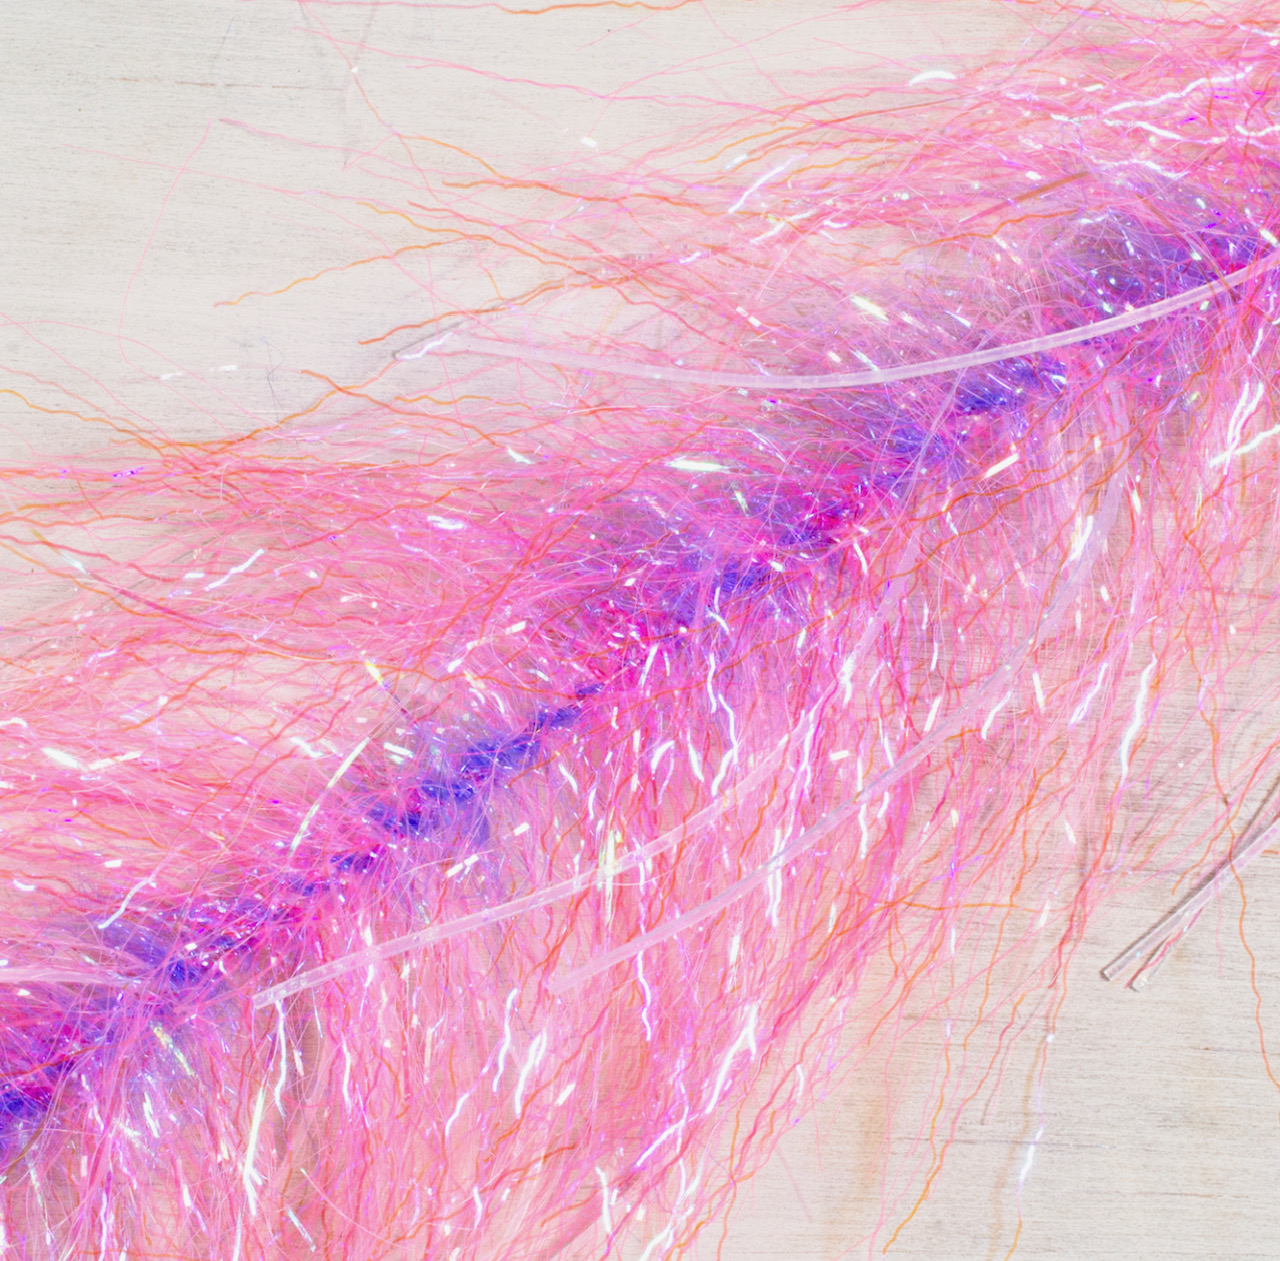 Fair Flies 5D Brushes - Sparse Shrimp Candy Pink/Lavender